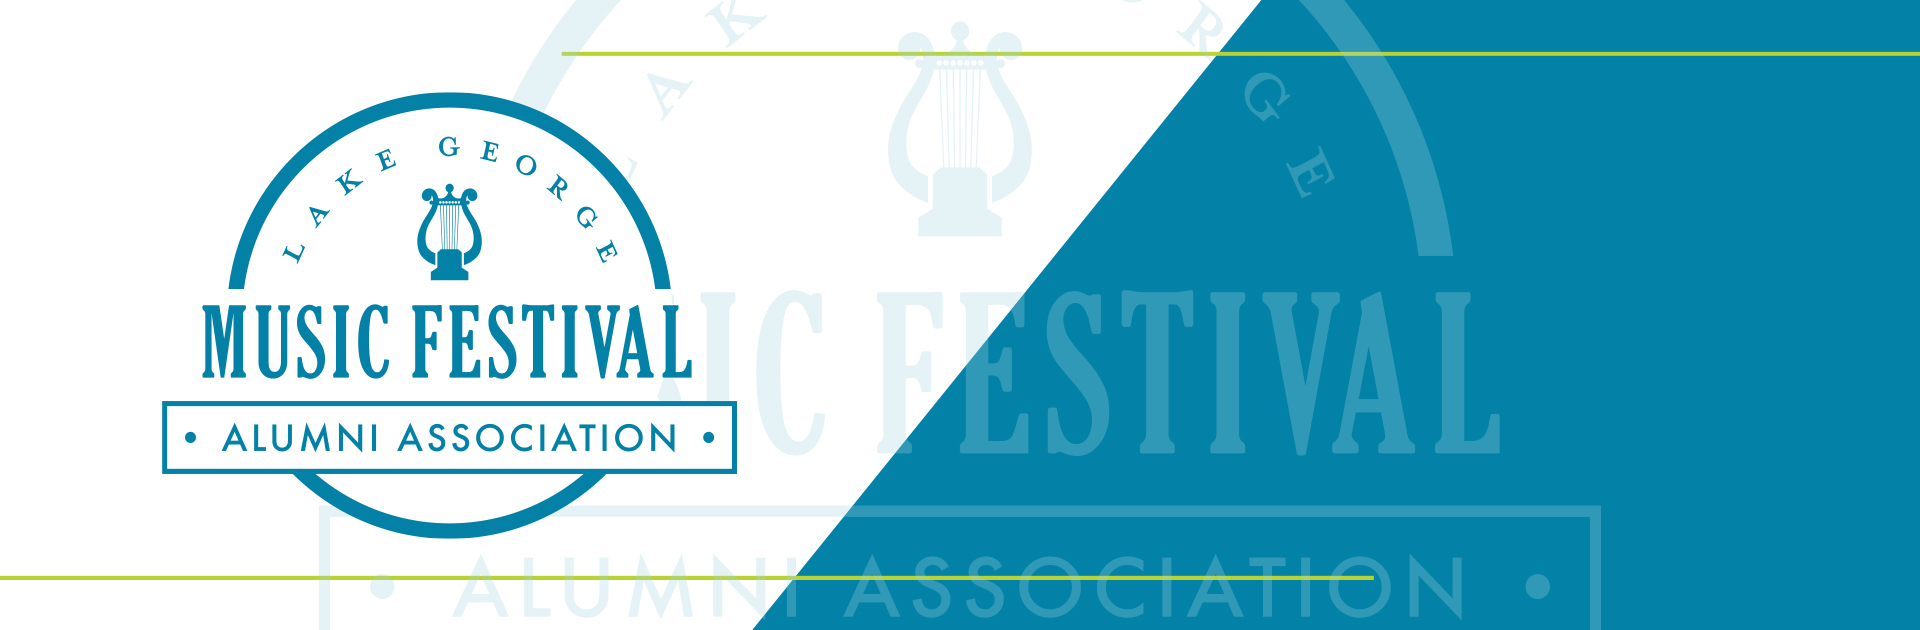 Alumni Association - Lake George Music Festival